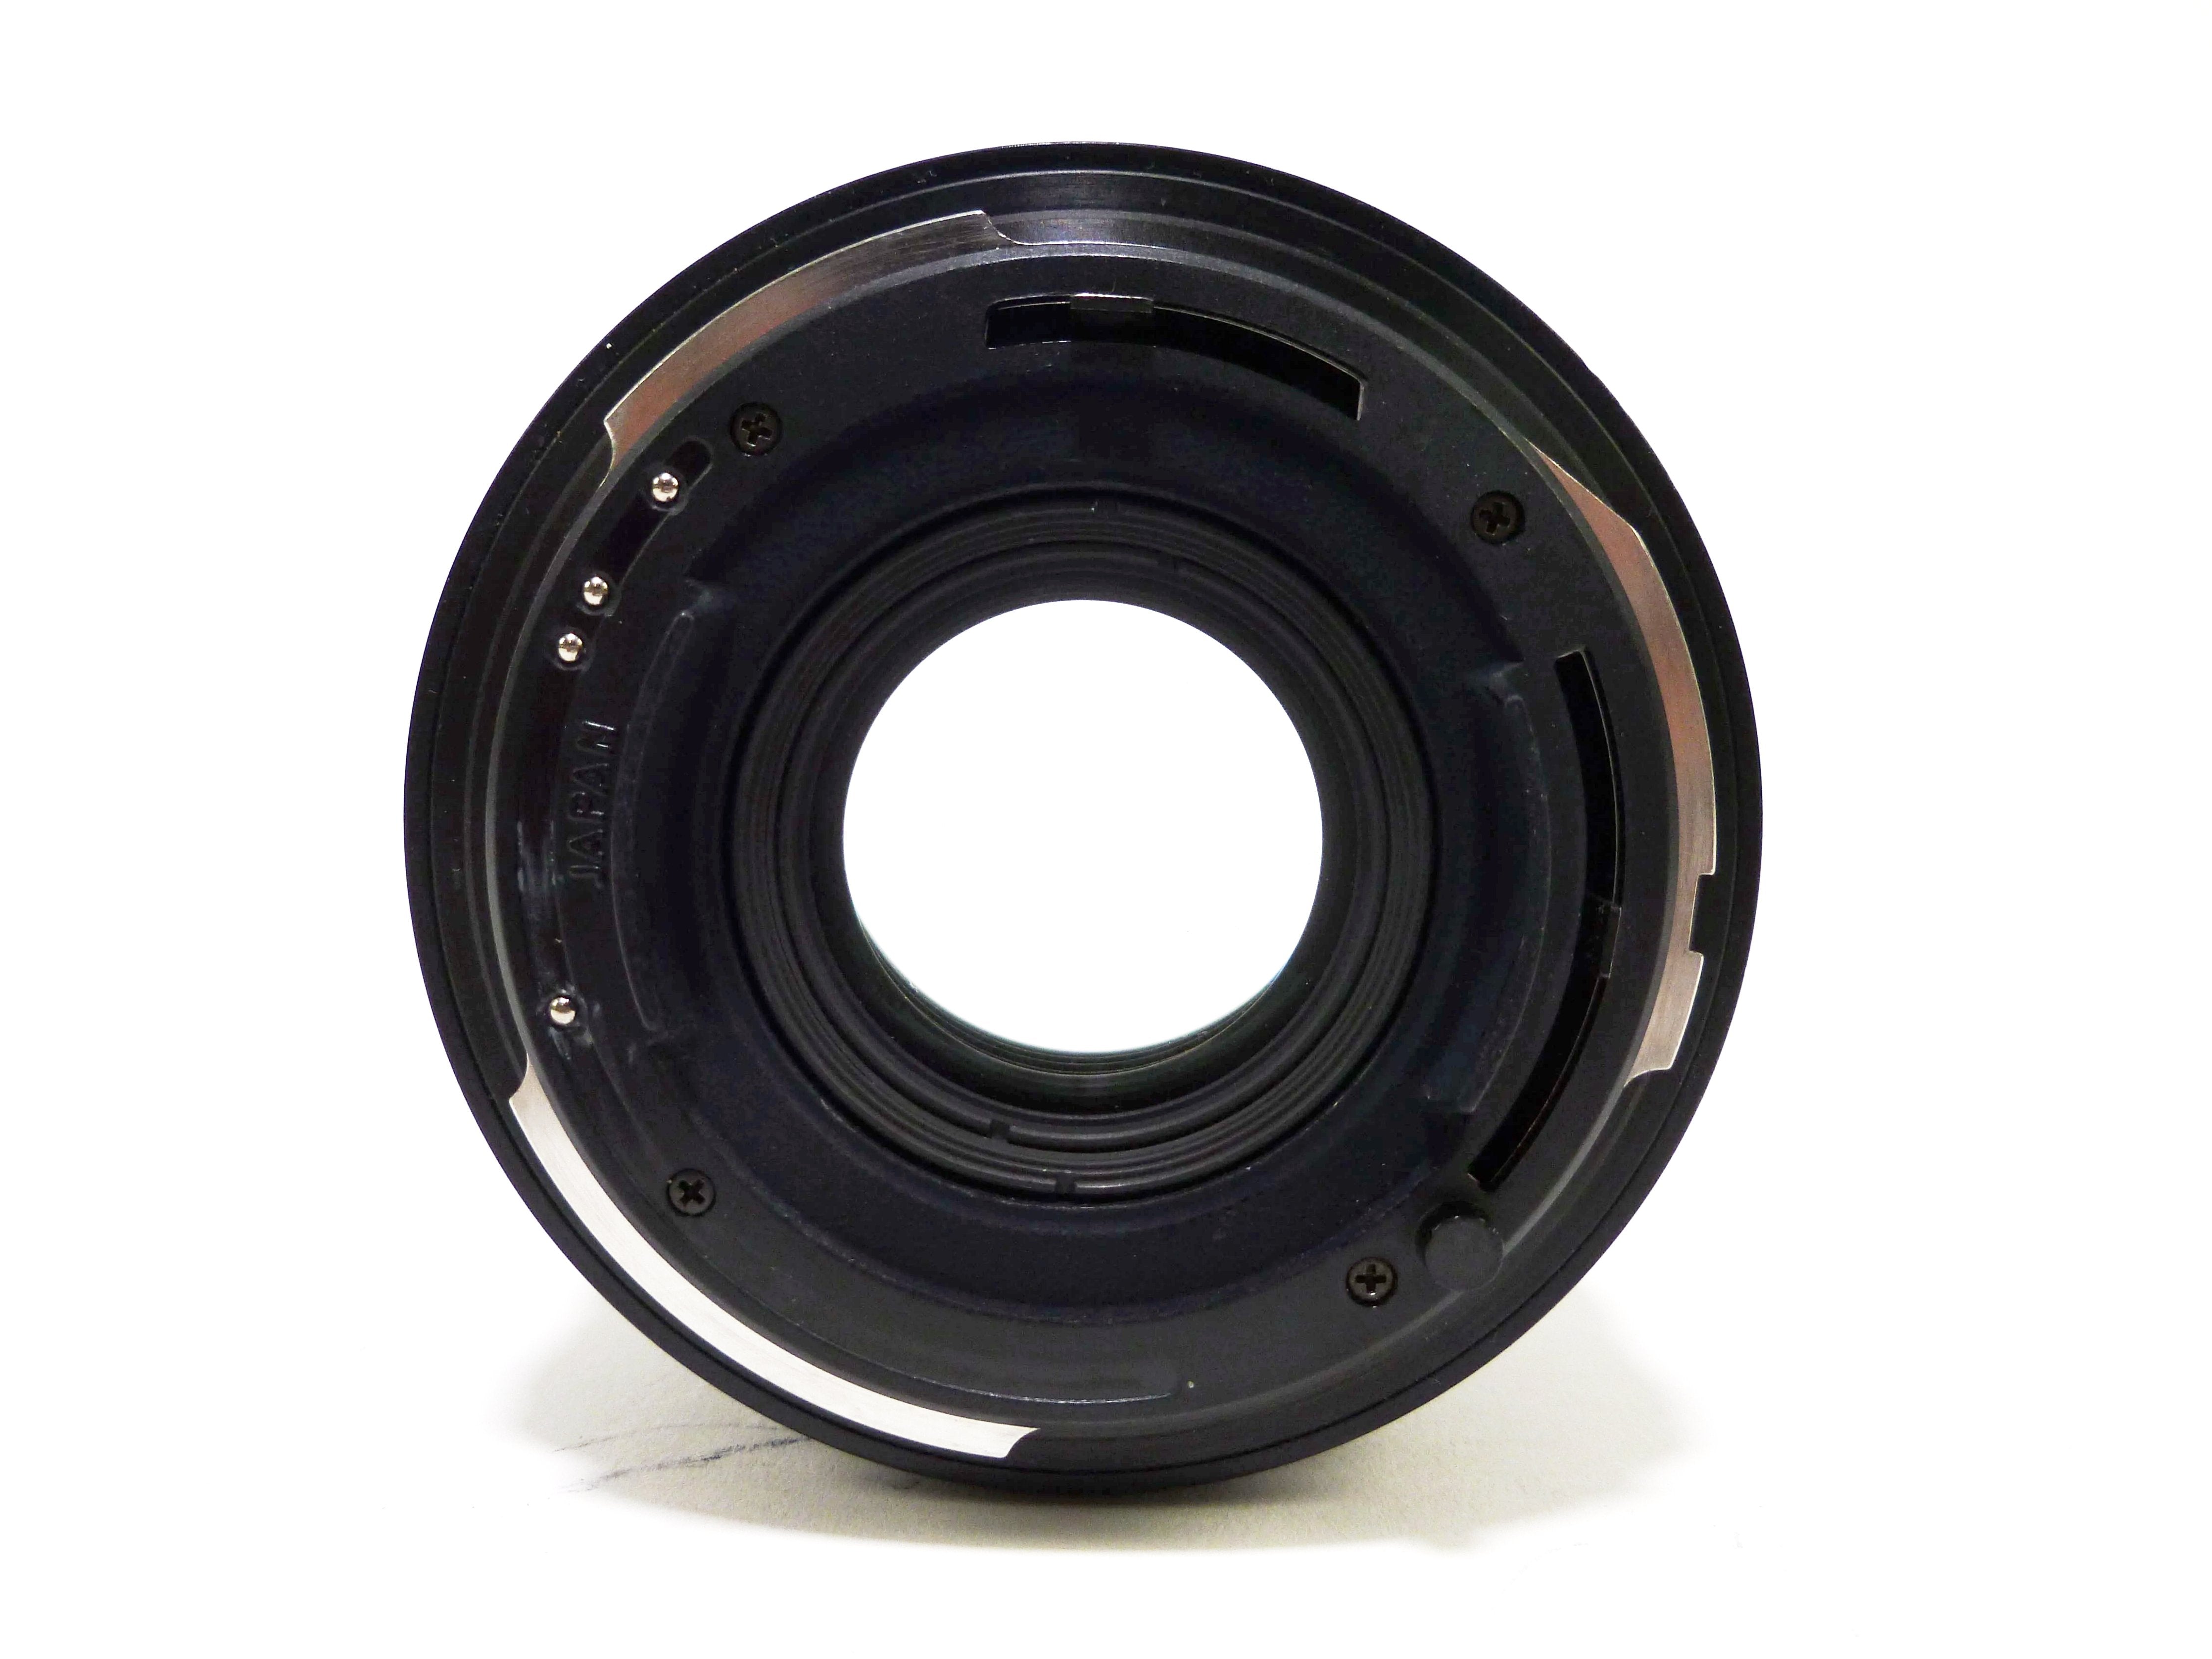 Pentax 645 SMC LS 75mm f/2.8 Lens